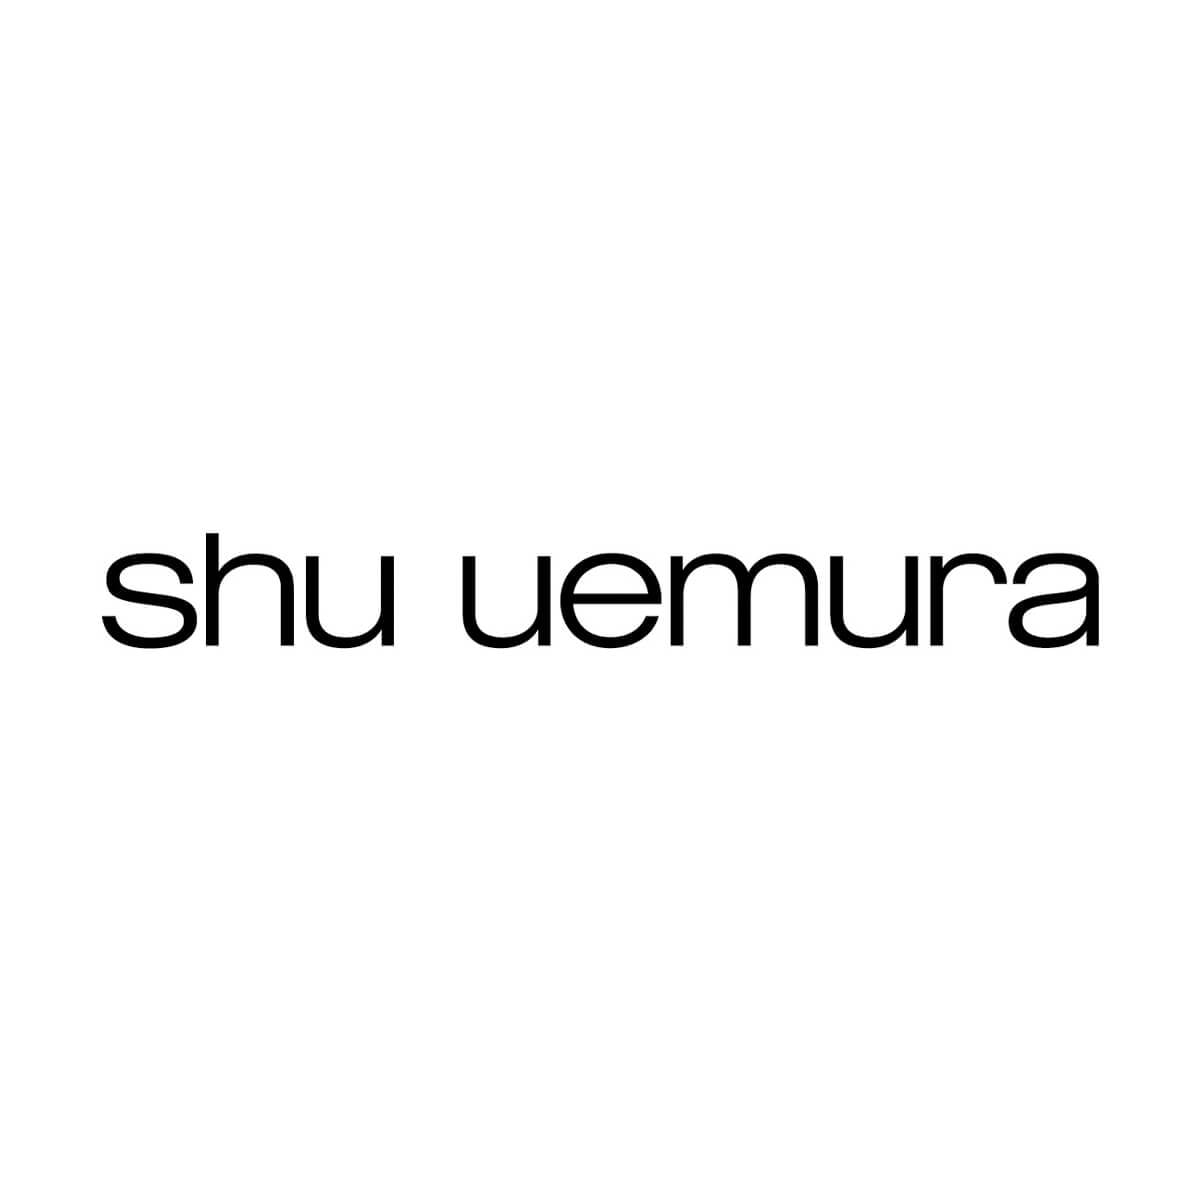 Hair Product Shu Uemura logo